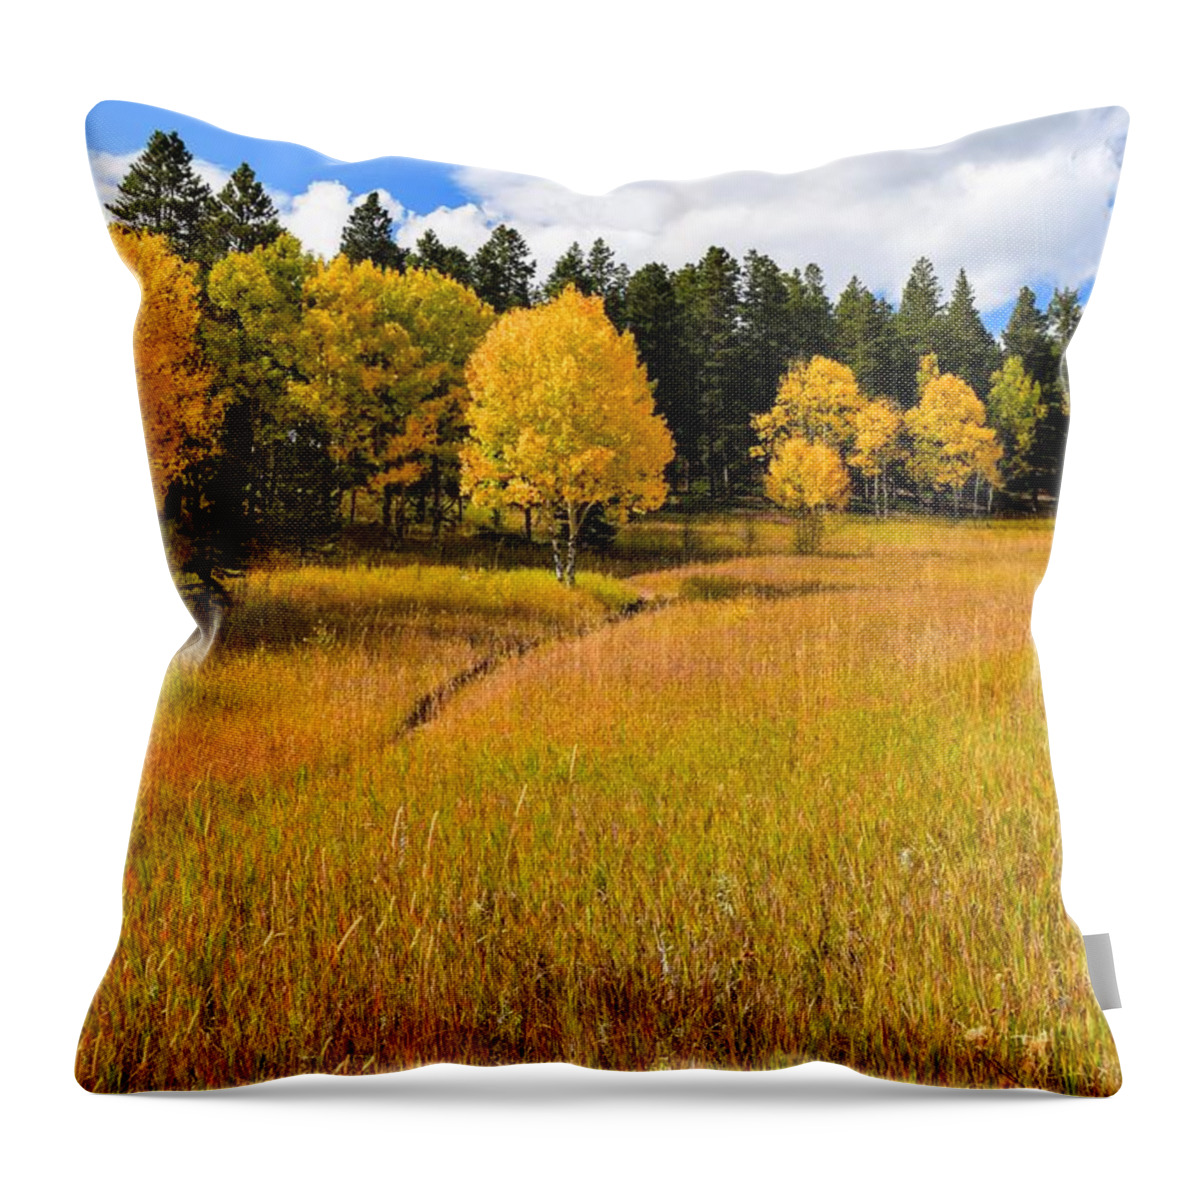 Aspen Meadow Throw Pillow featuring the photograph Aspen Meadow by Michael Brungardt